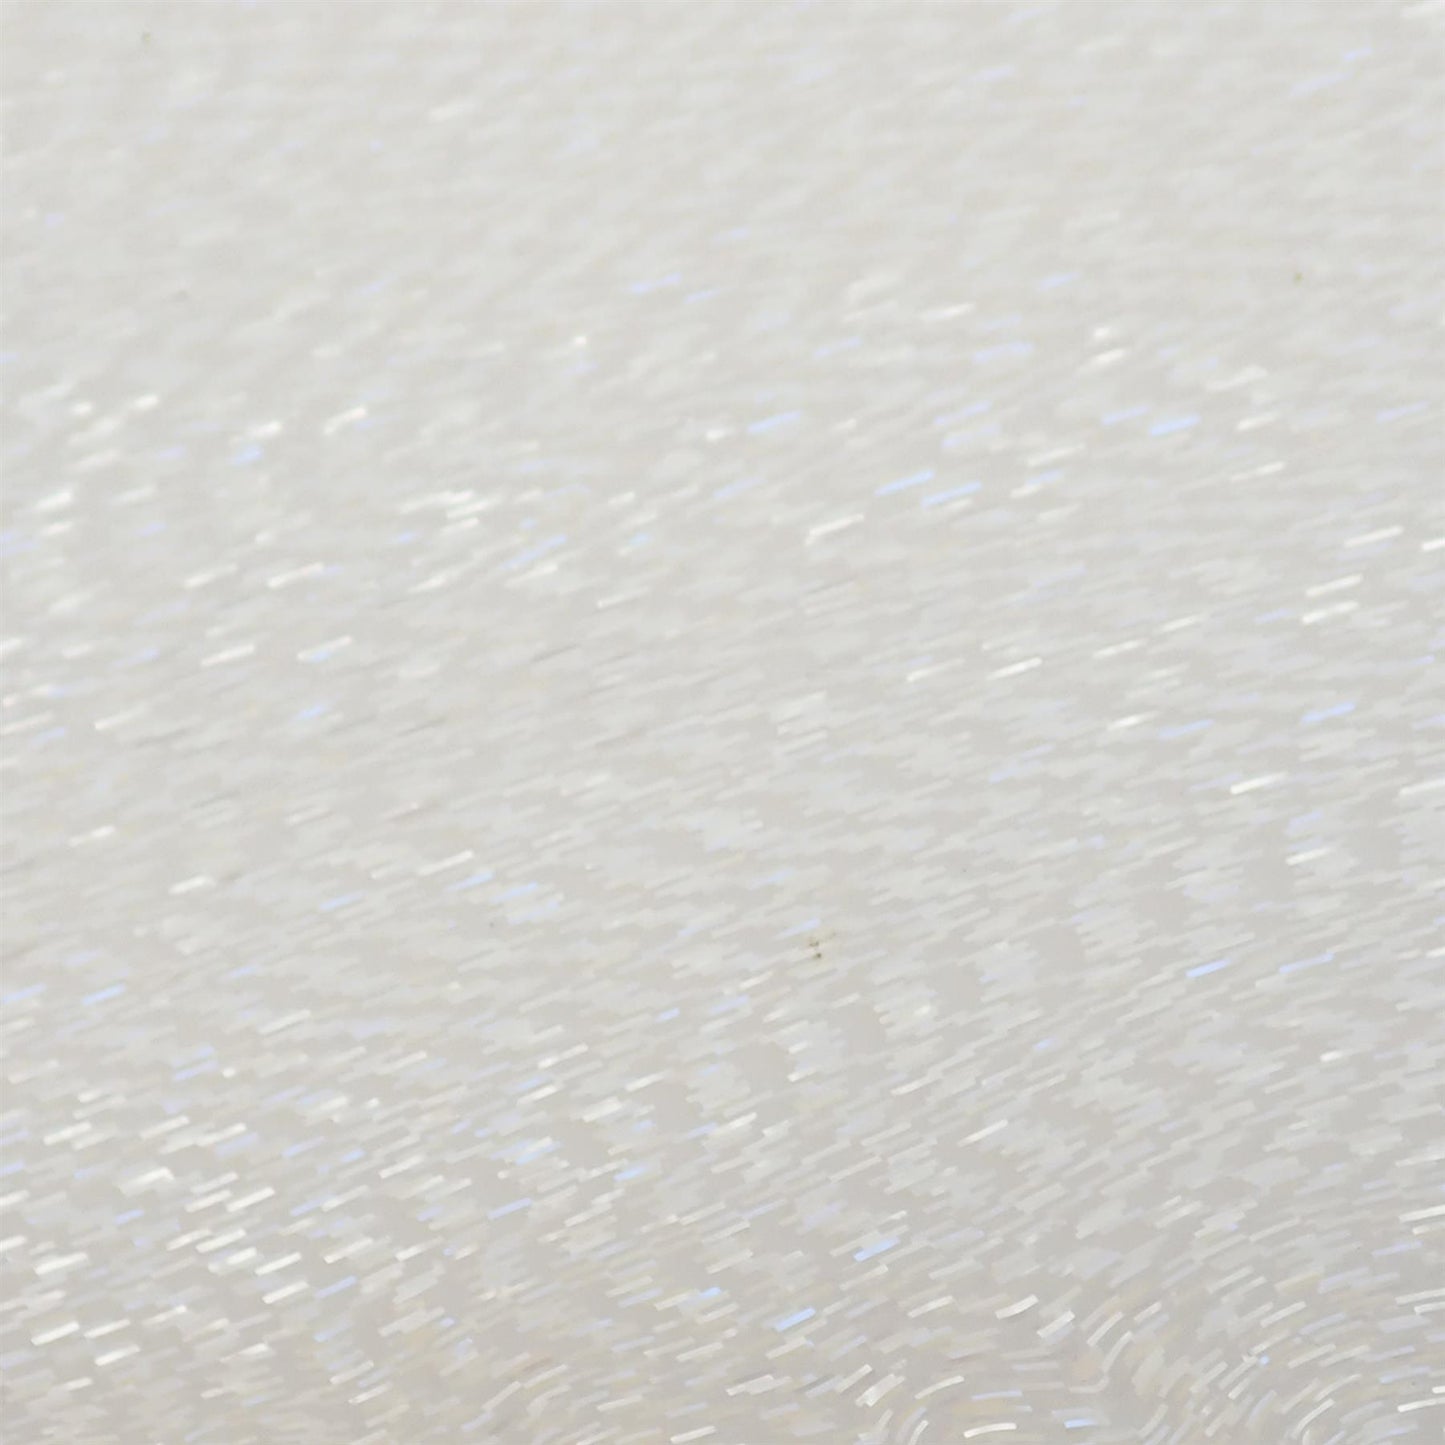 Incudo White Confetti Celluloid Laminate Acrylic Sheet - 300x200x3mm (11.8x7.87x0.12")